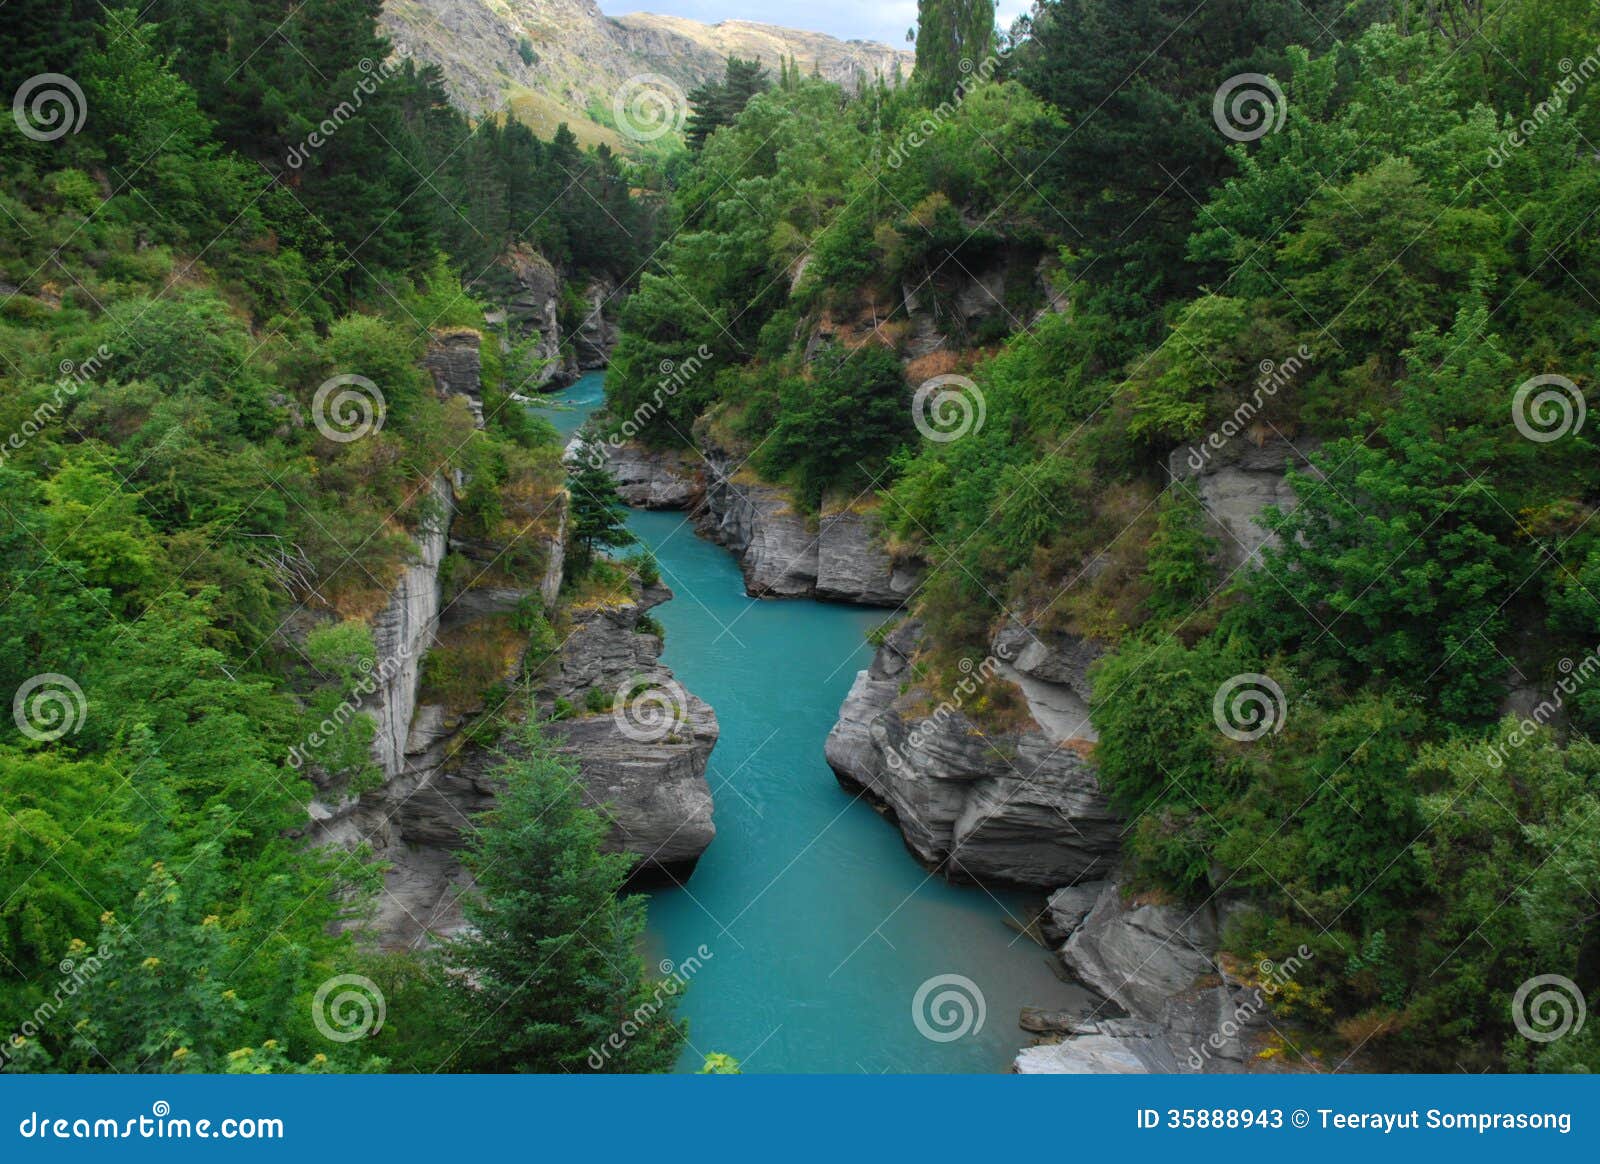 Shotover River blue stream stock image. Image of stream - 35888943